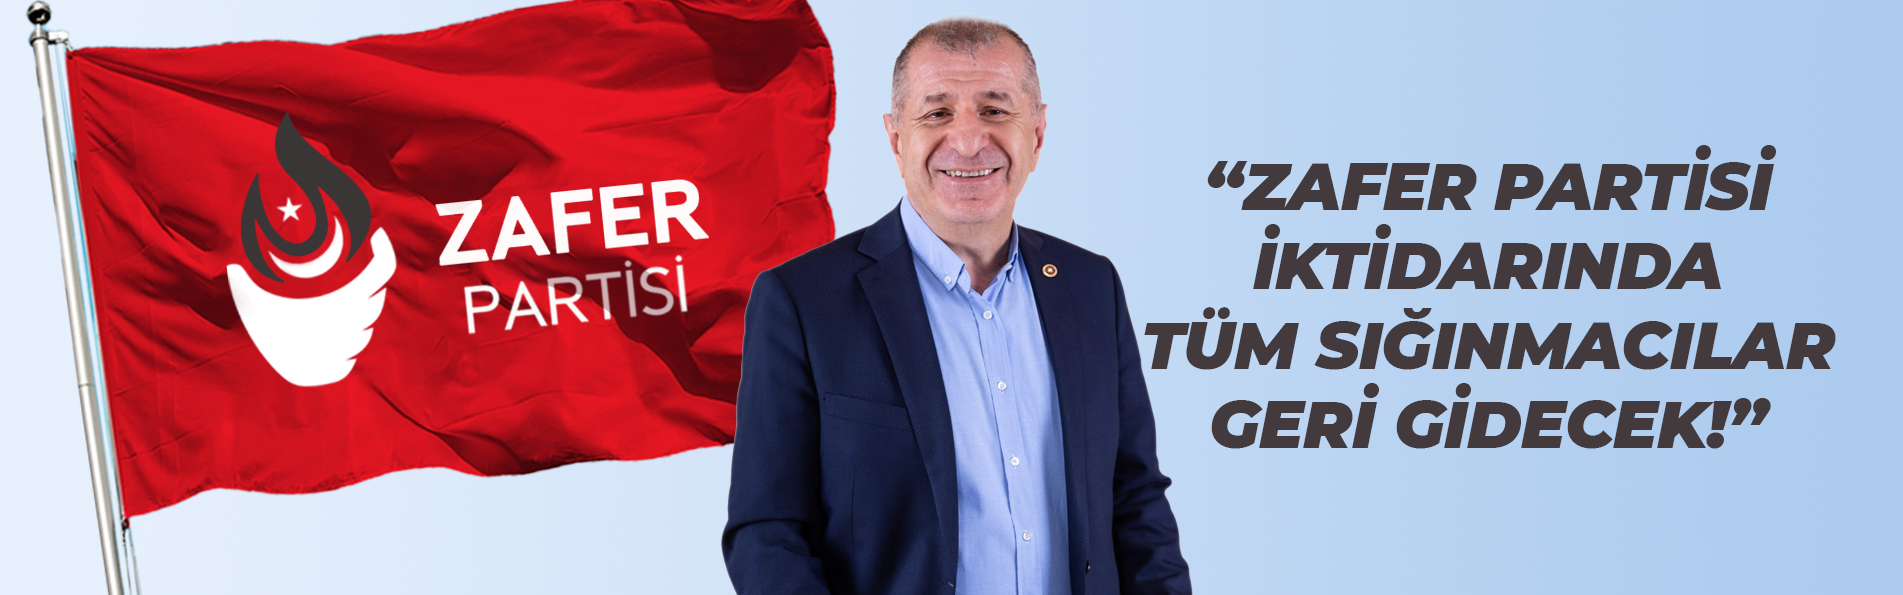 ZAFER PARTİSİ SEÇİMLERE GİRMEYE HAK KAZANDI...